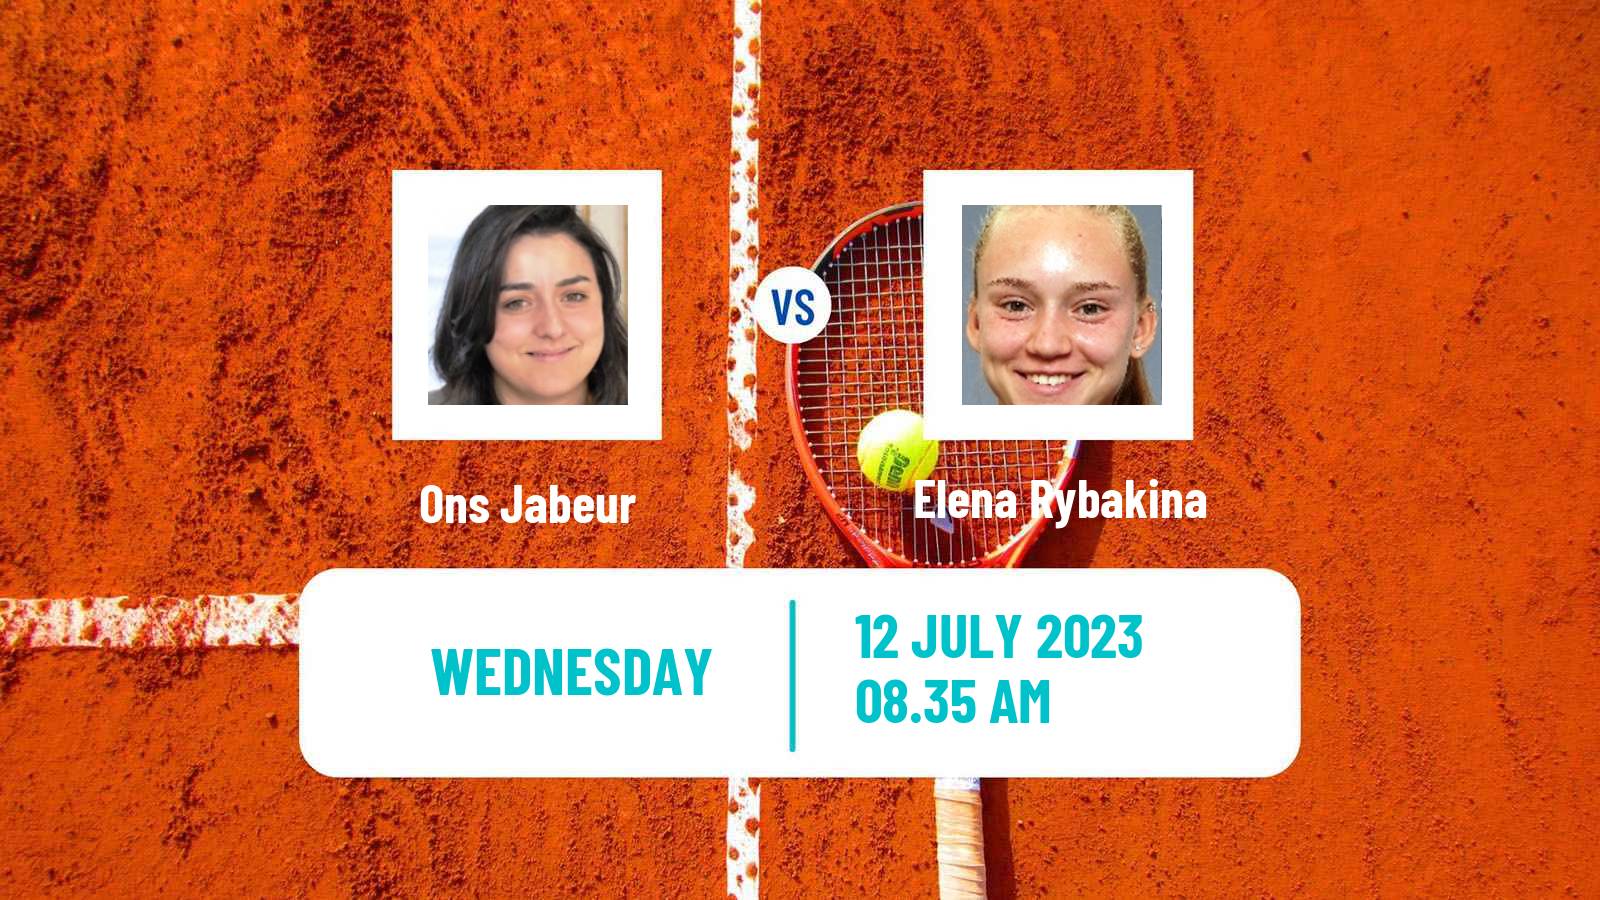 Tennis WTA Wimbledon Ons Jabeur - Elena Rybakina